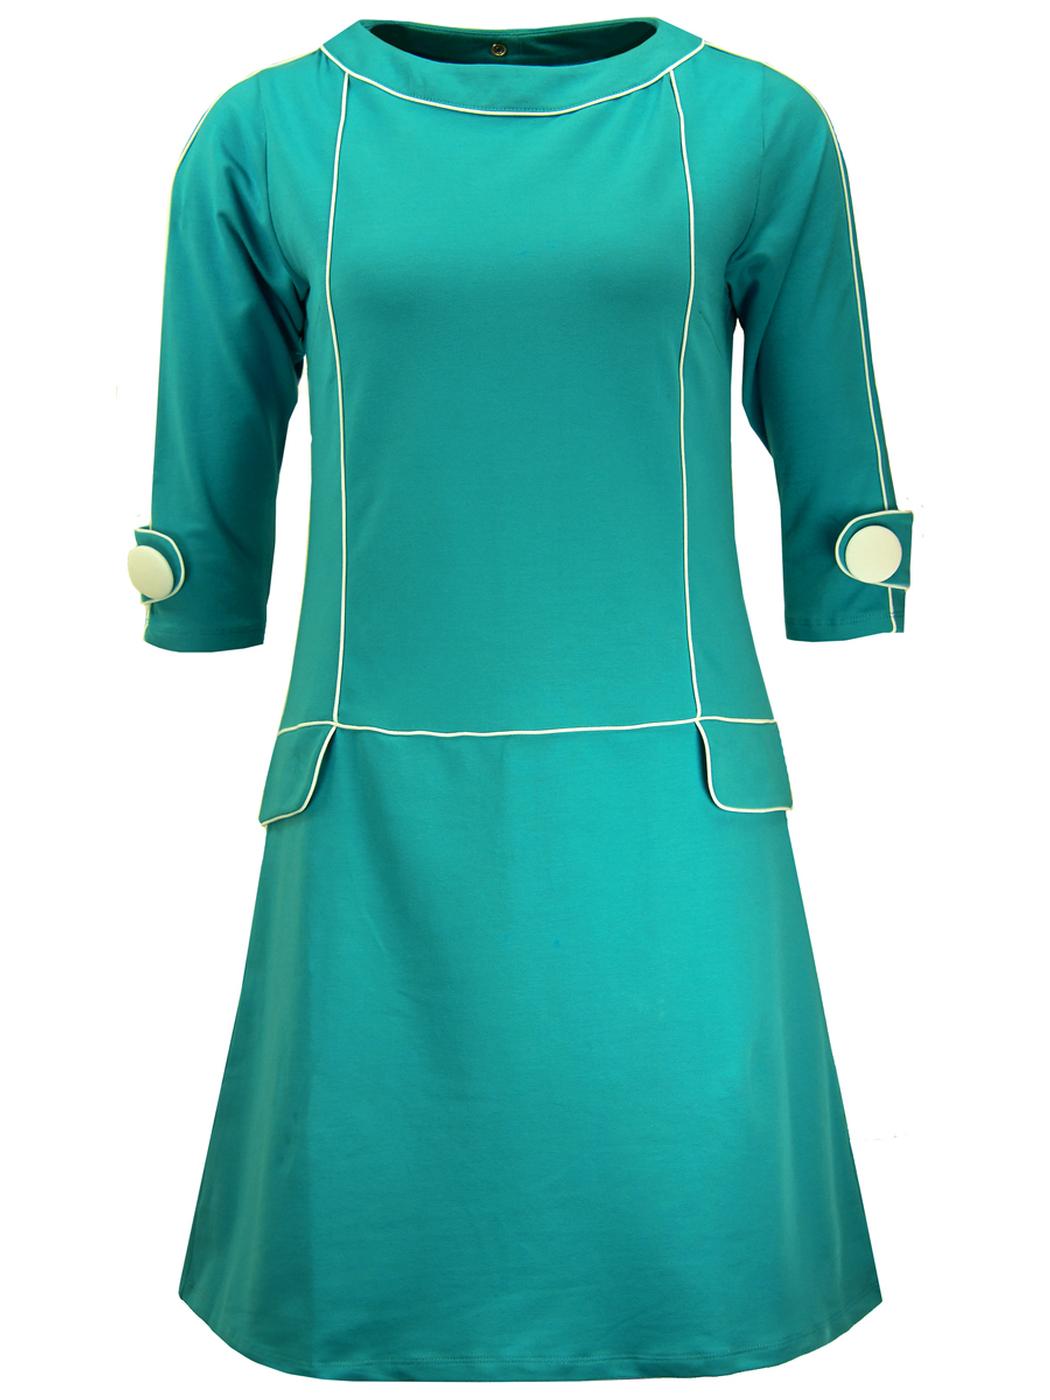 MADEMOISELLE YEYE Anise Bread Retro 60s Mod Dress in Turquoise